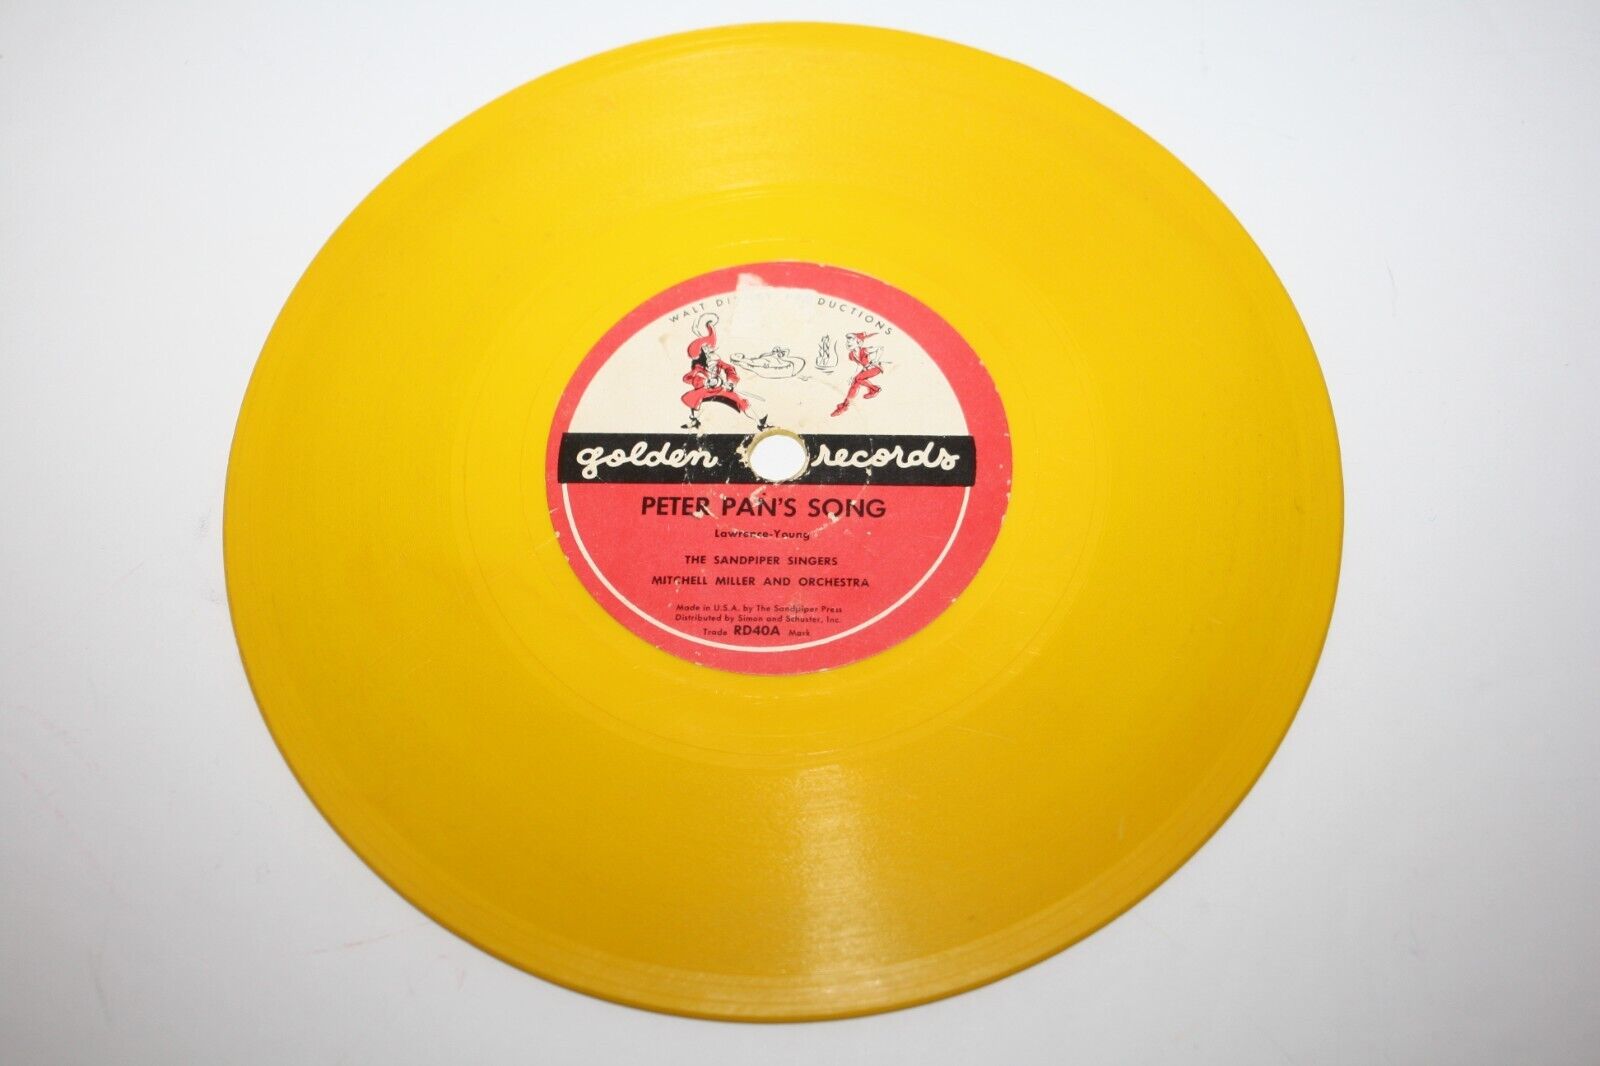 VTG Walt Disney Golden Records 78 RPM Peter Pan's Song/Never Smile At A Croc